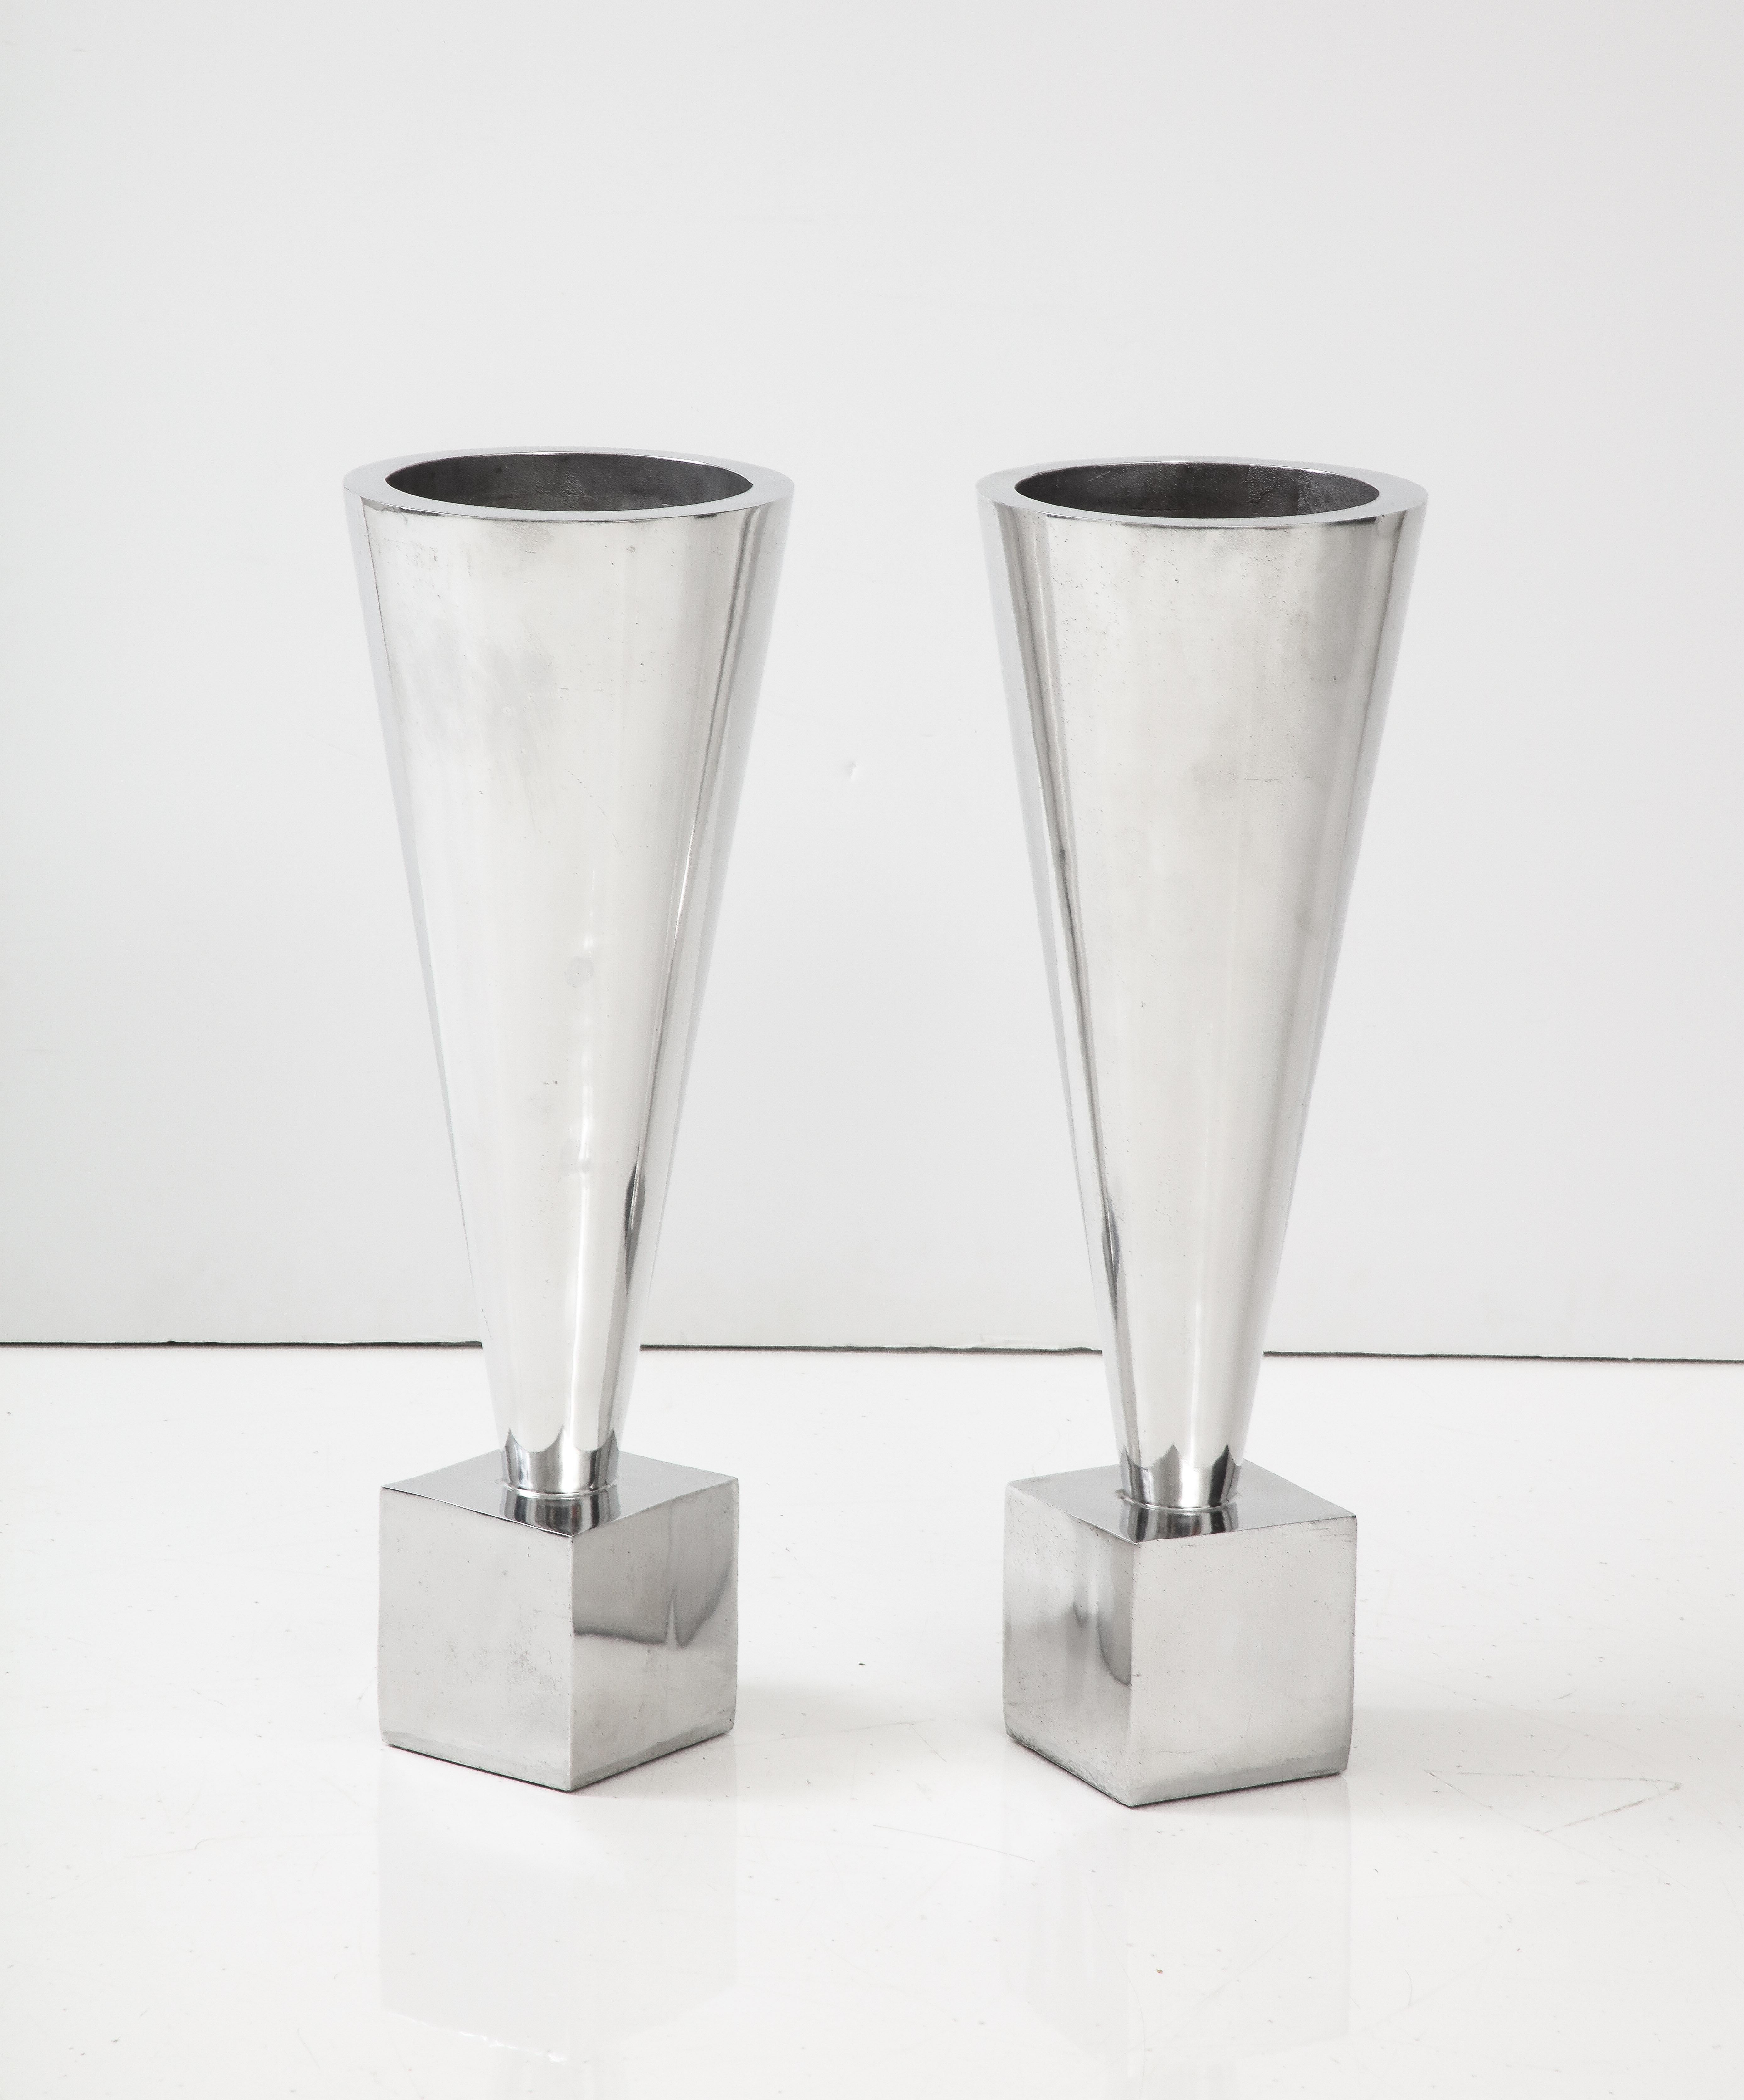 1970's Modernist Aluminum Planters/Vases  For Sale 2